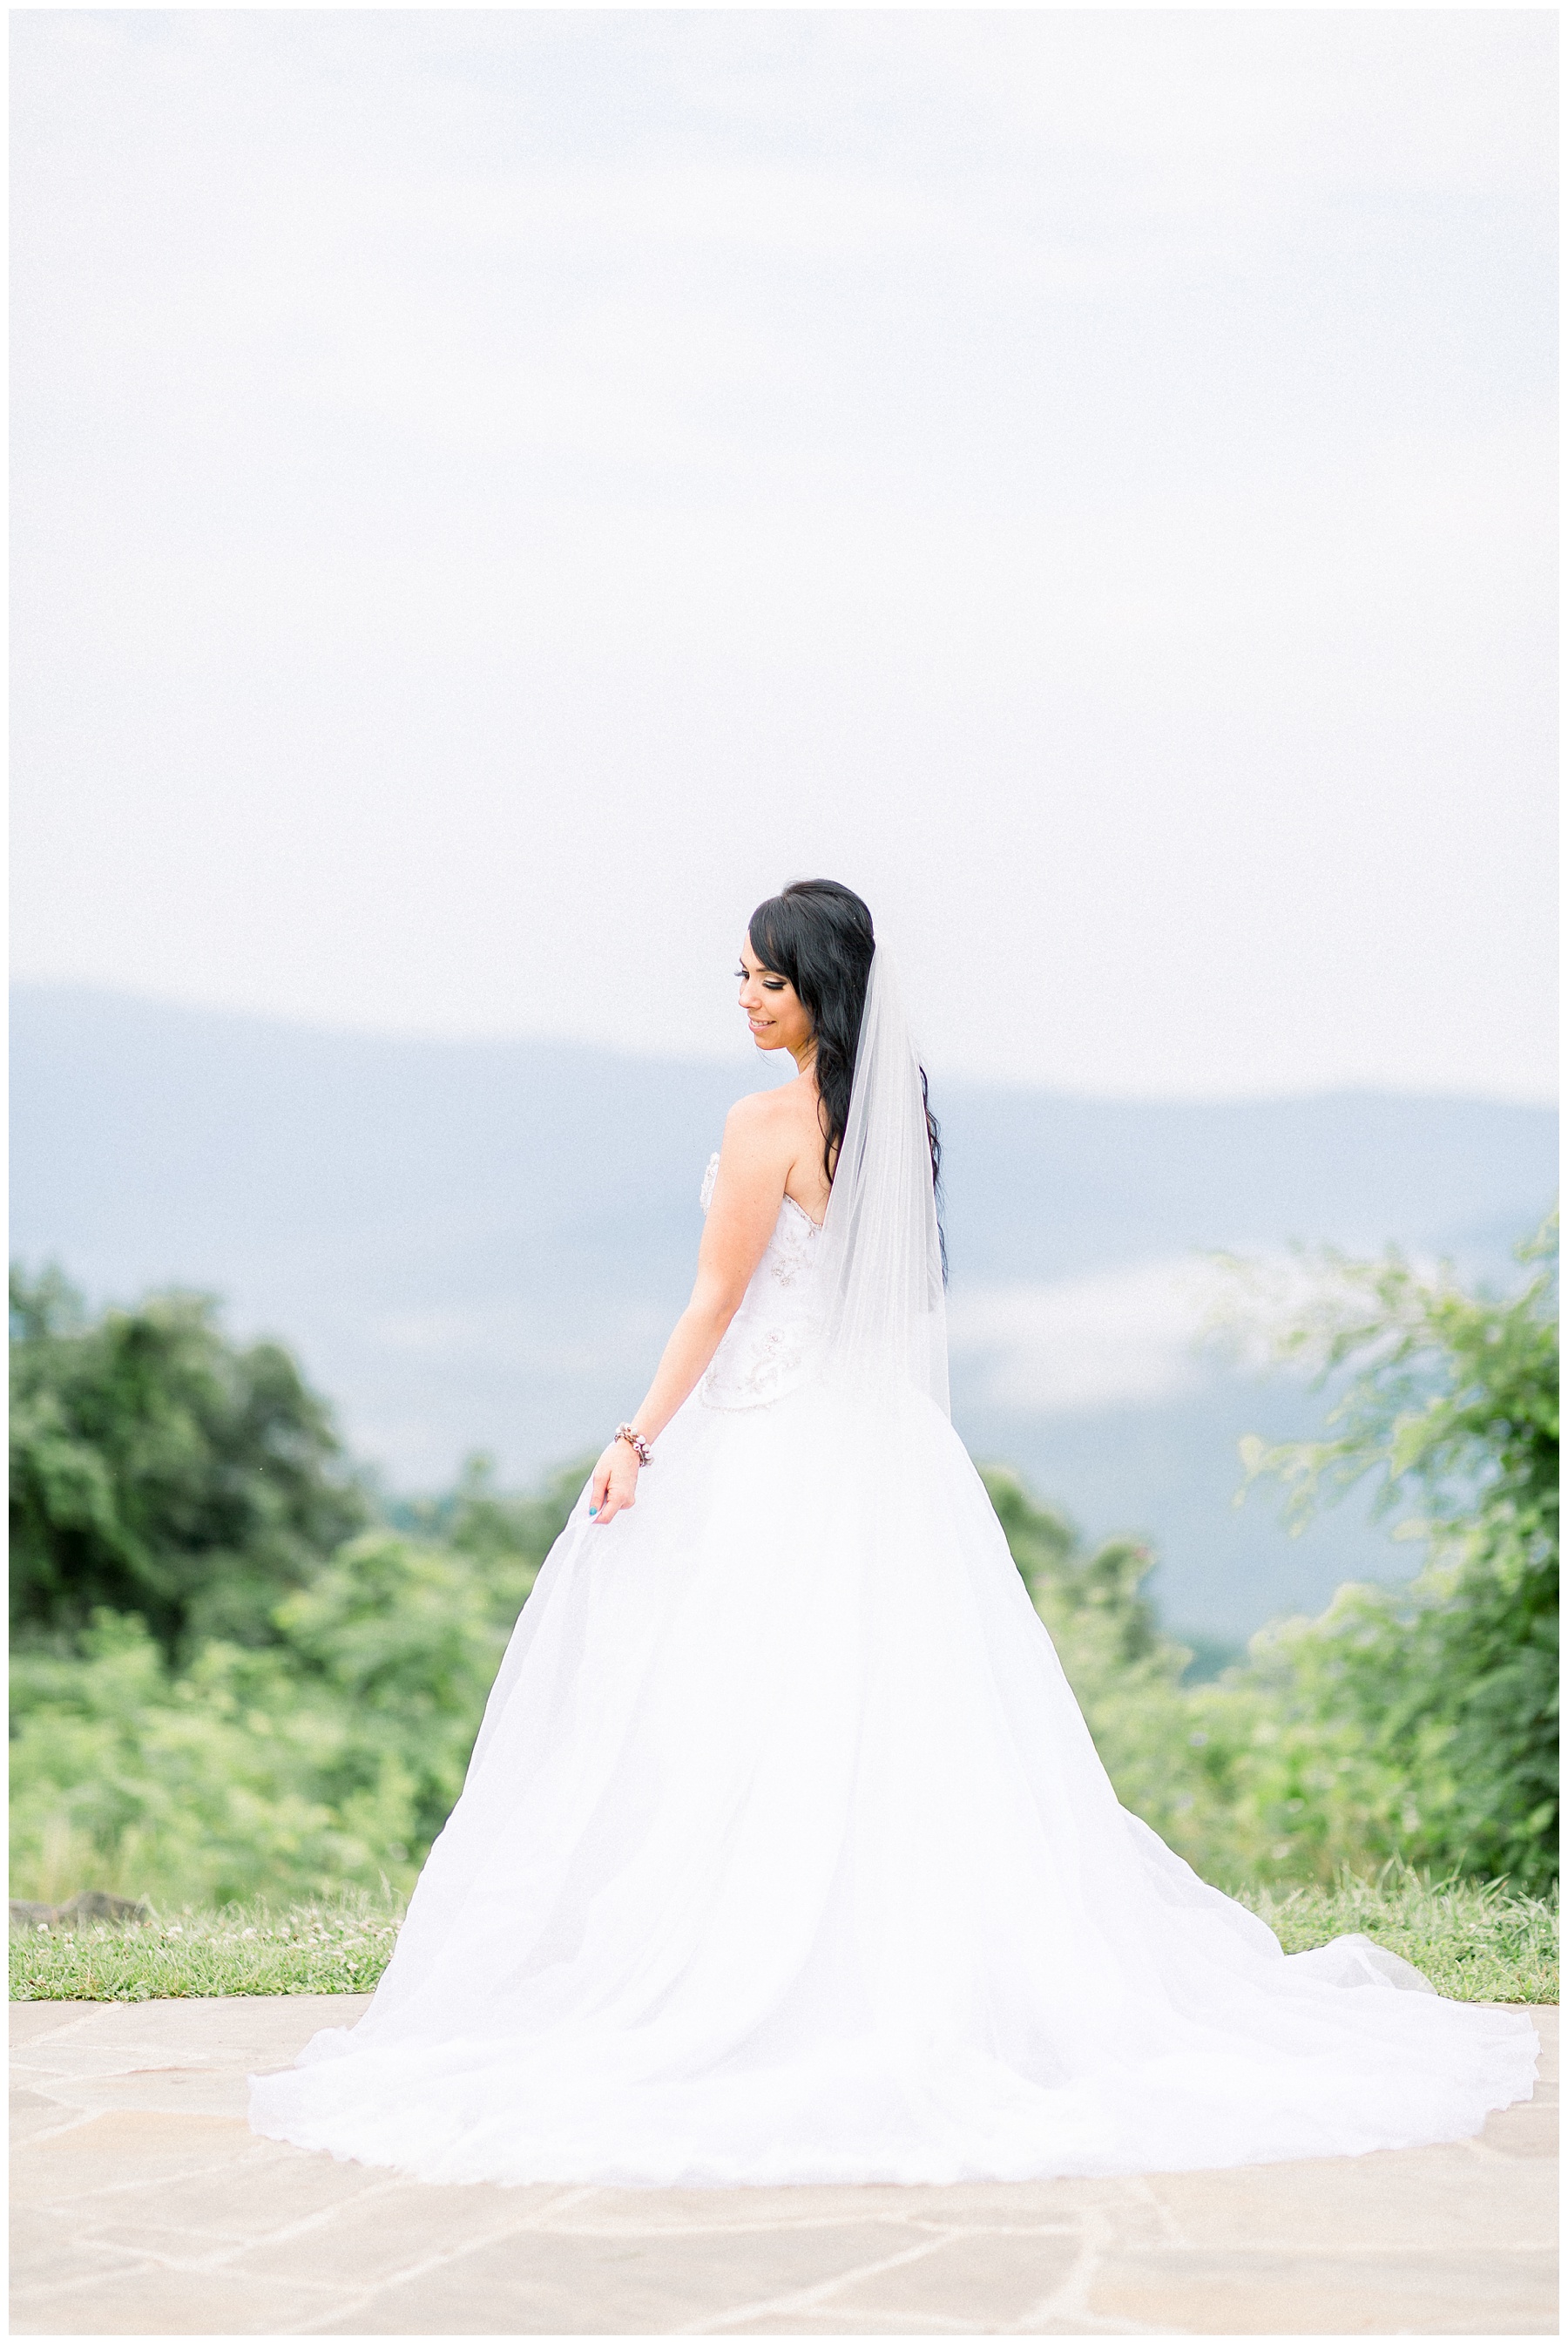 Shenandoah Valley National Park Anniversary Session. Amanda Eloise Photography. North Carolina Wedding Photographer. Virginia Wedding Photographer